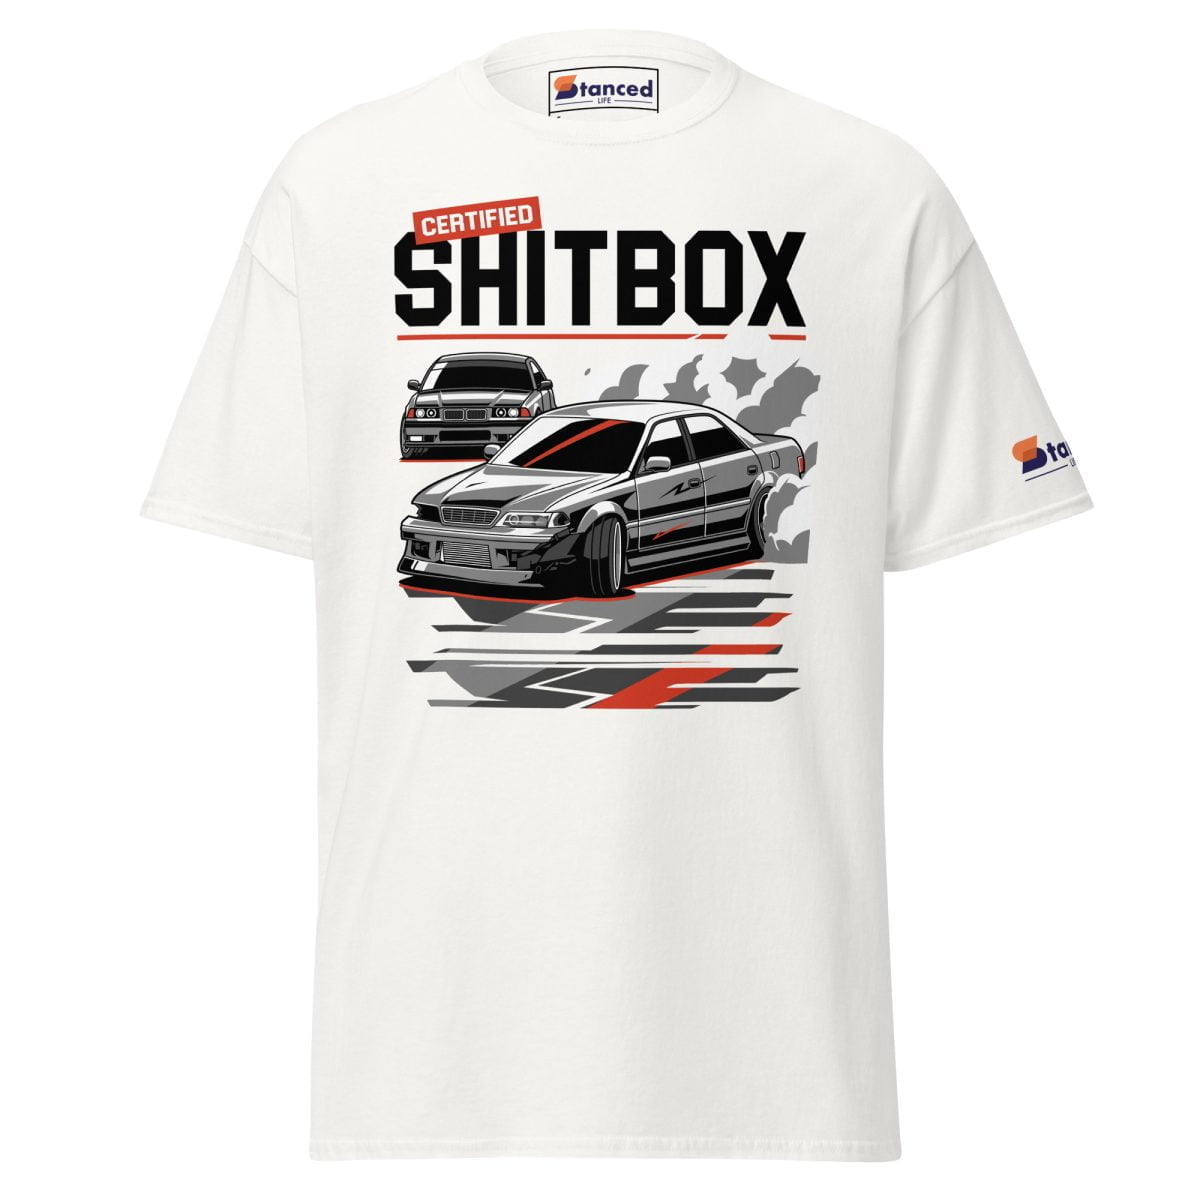 A white E36 BMW JDM JZX100 Toyota Chaser Drifting Mens T shirt Certified Shitbox | StancedLife